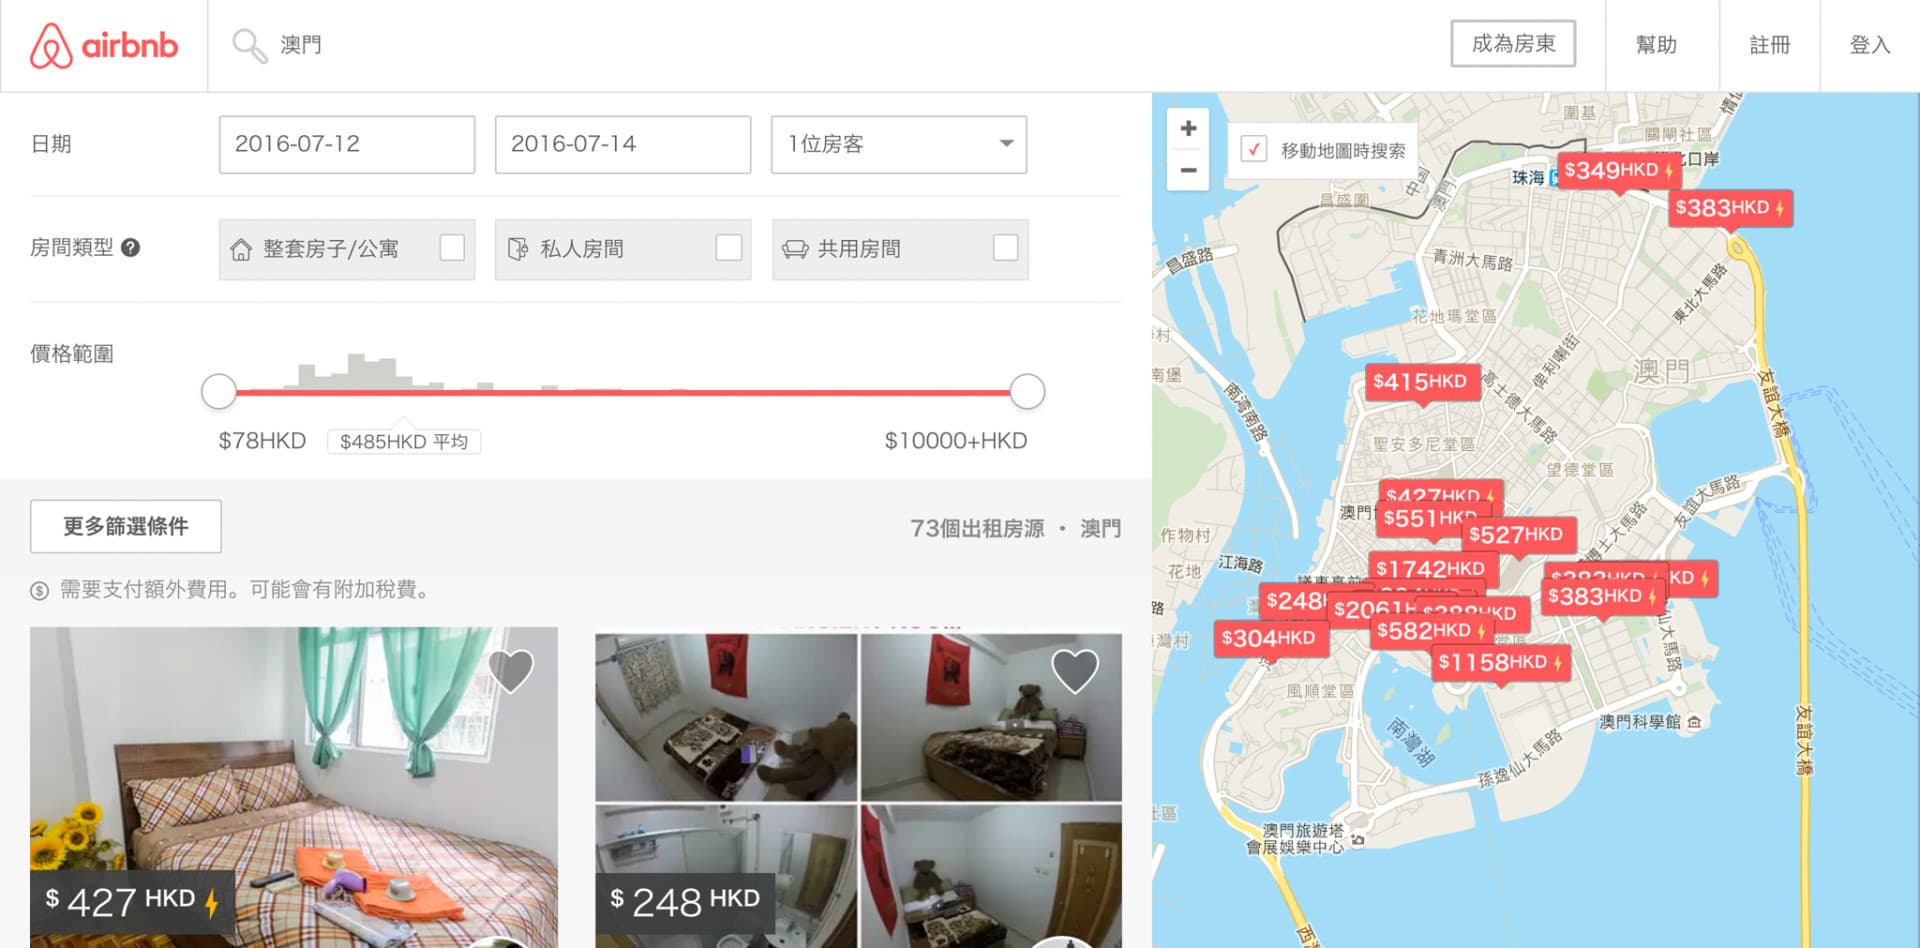 Airbnb網站上有不少私樓單位放租，逐晚計錢。